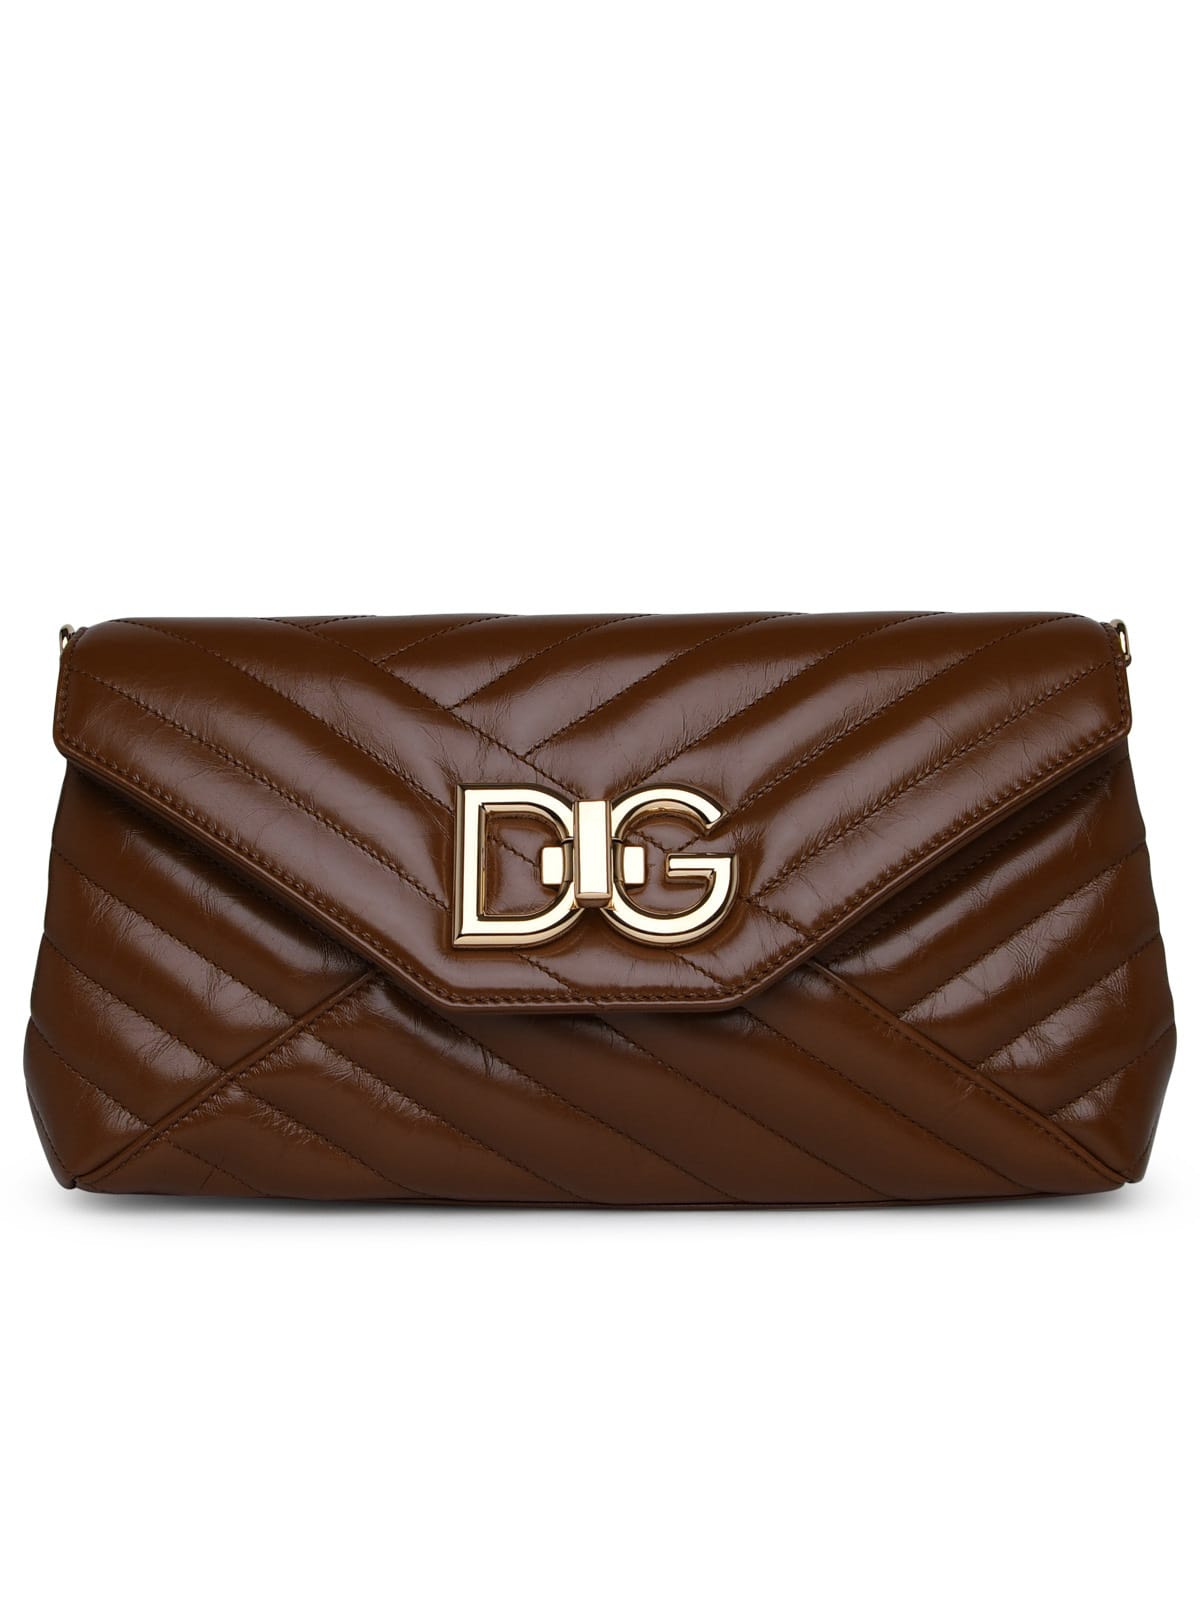 Dolce & Gabbana Lop Camel Calf Leather Shoulder Strap In Brown